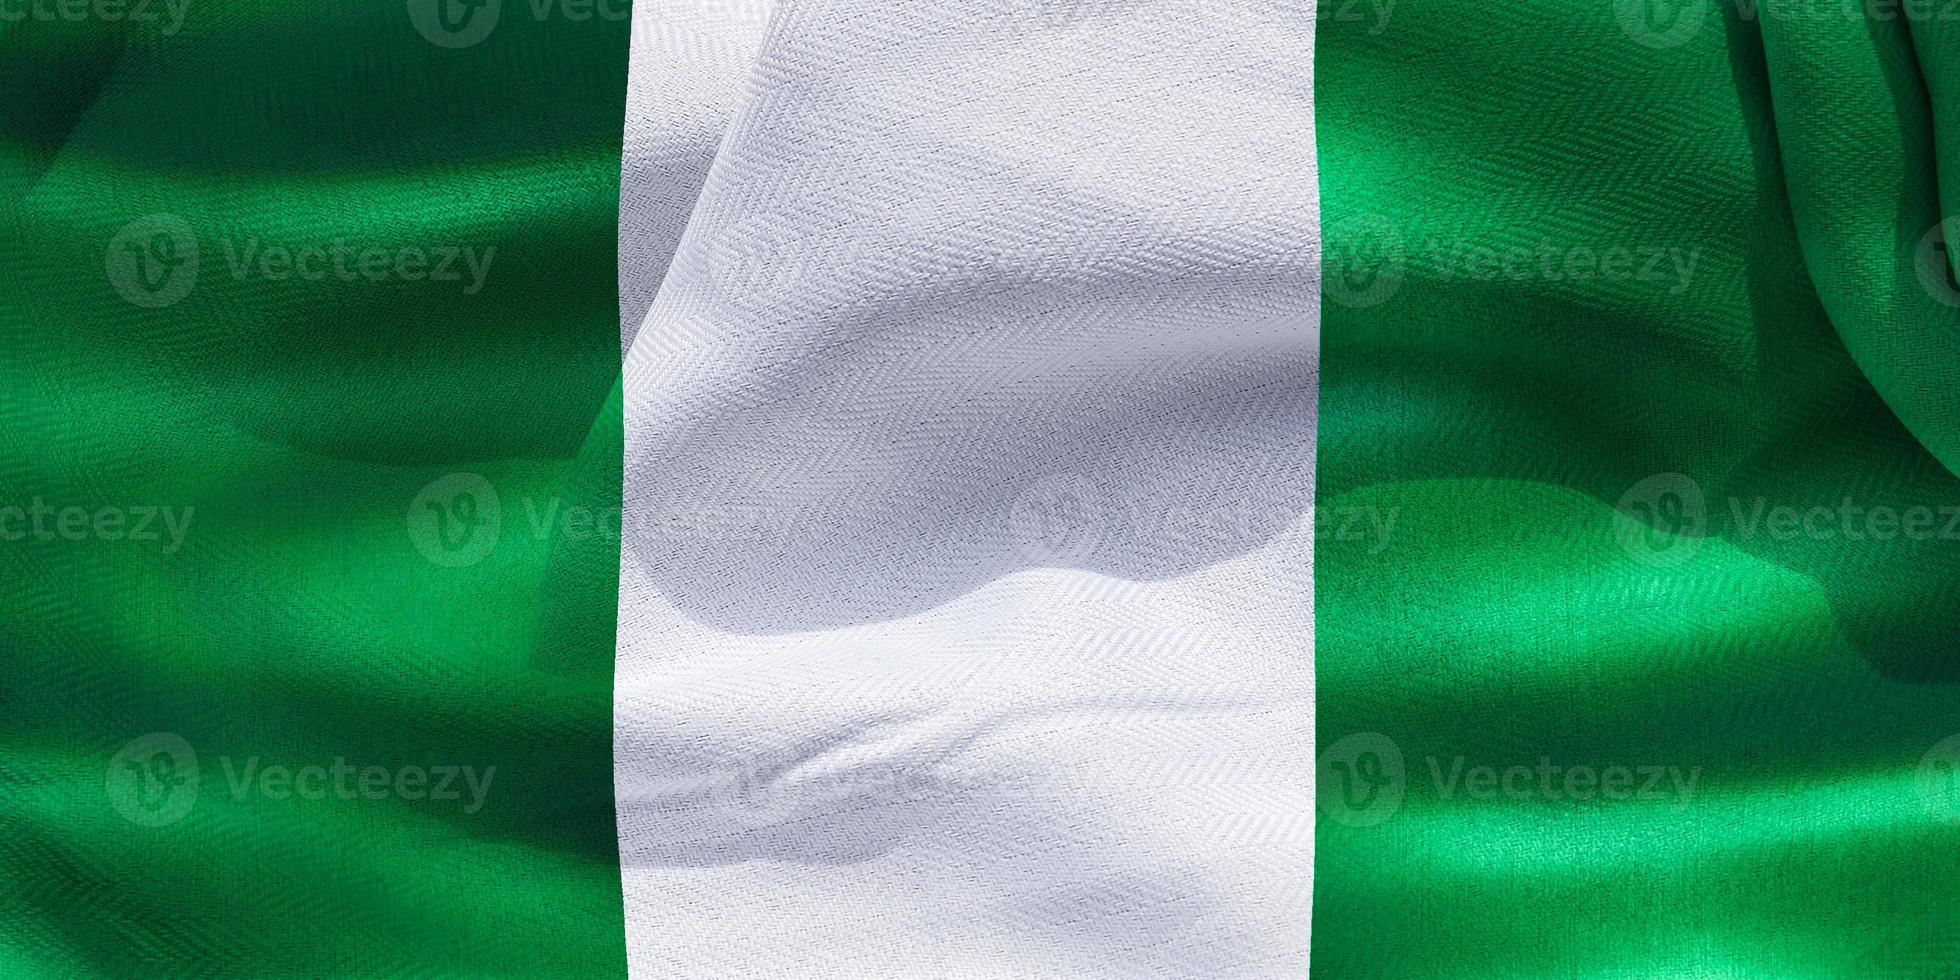 3D-Illustration of a Nigeria flag - realistic waving fabric flag photo